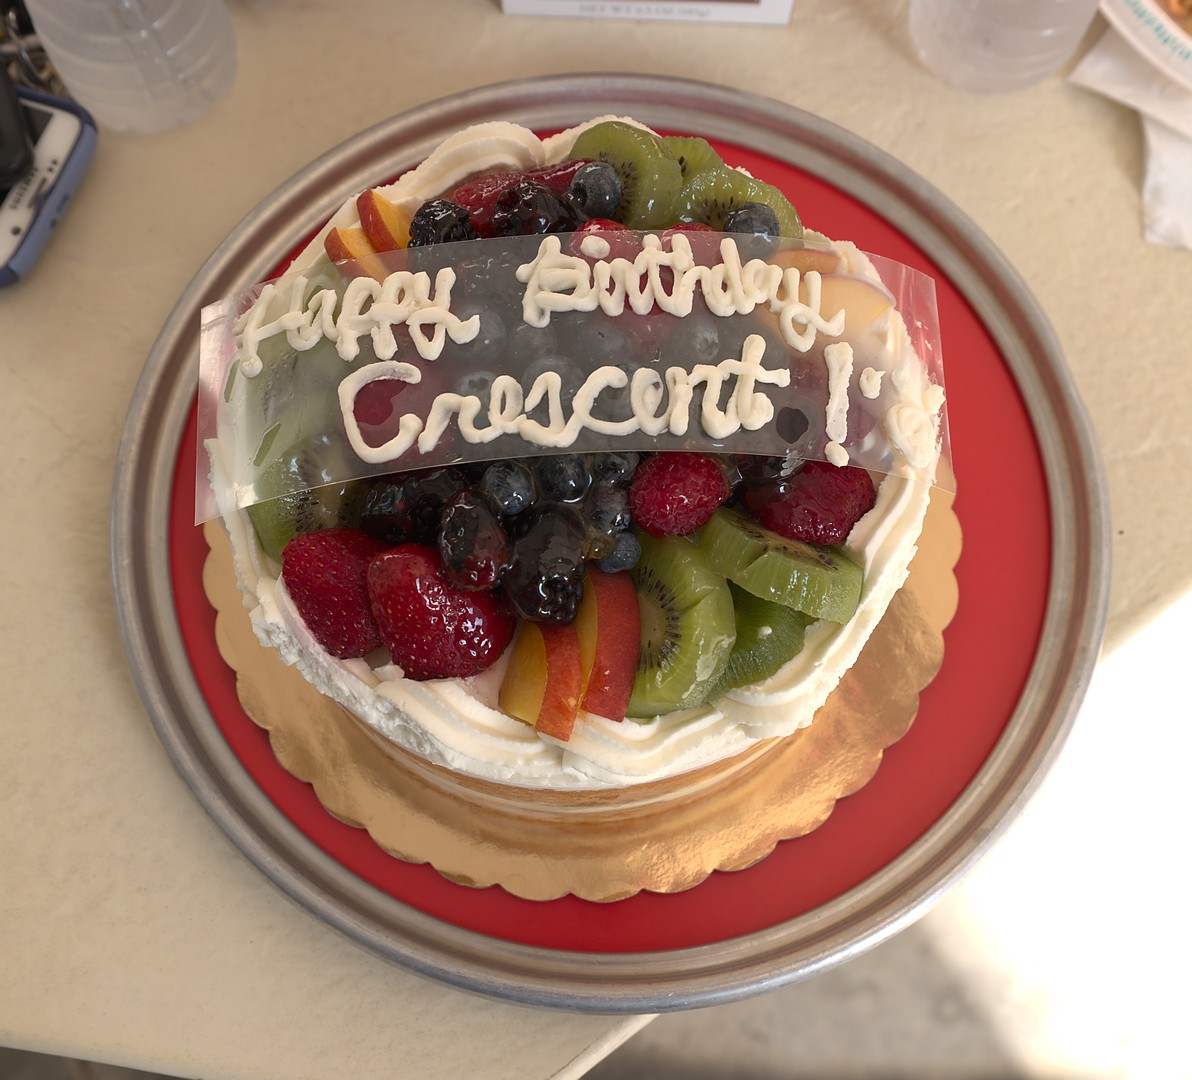 Crescent's birthday cake